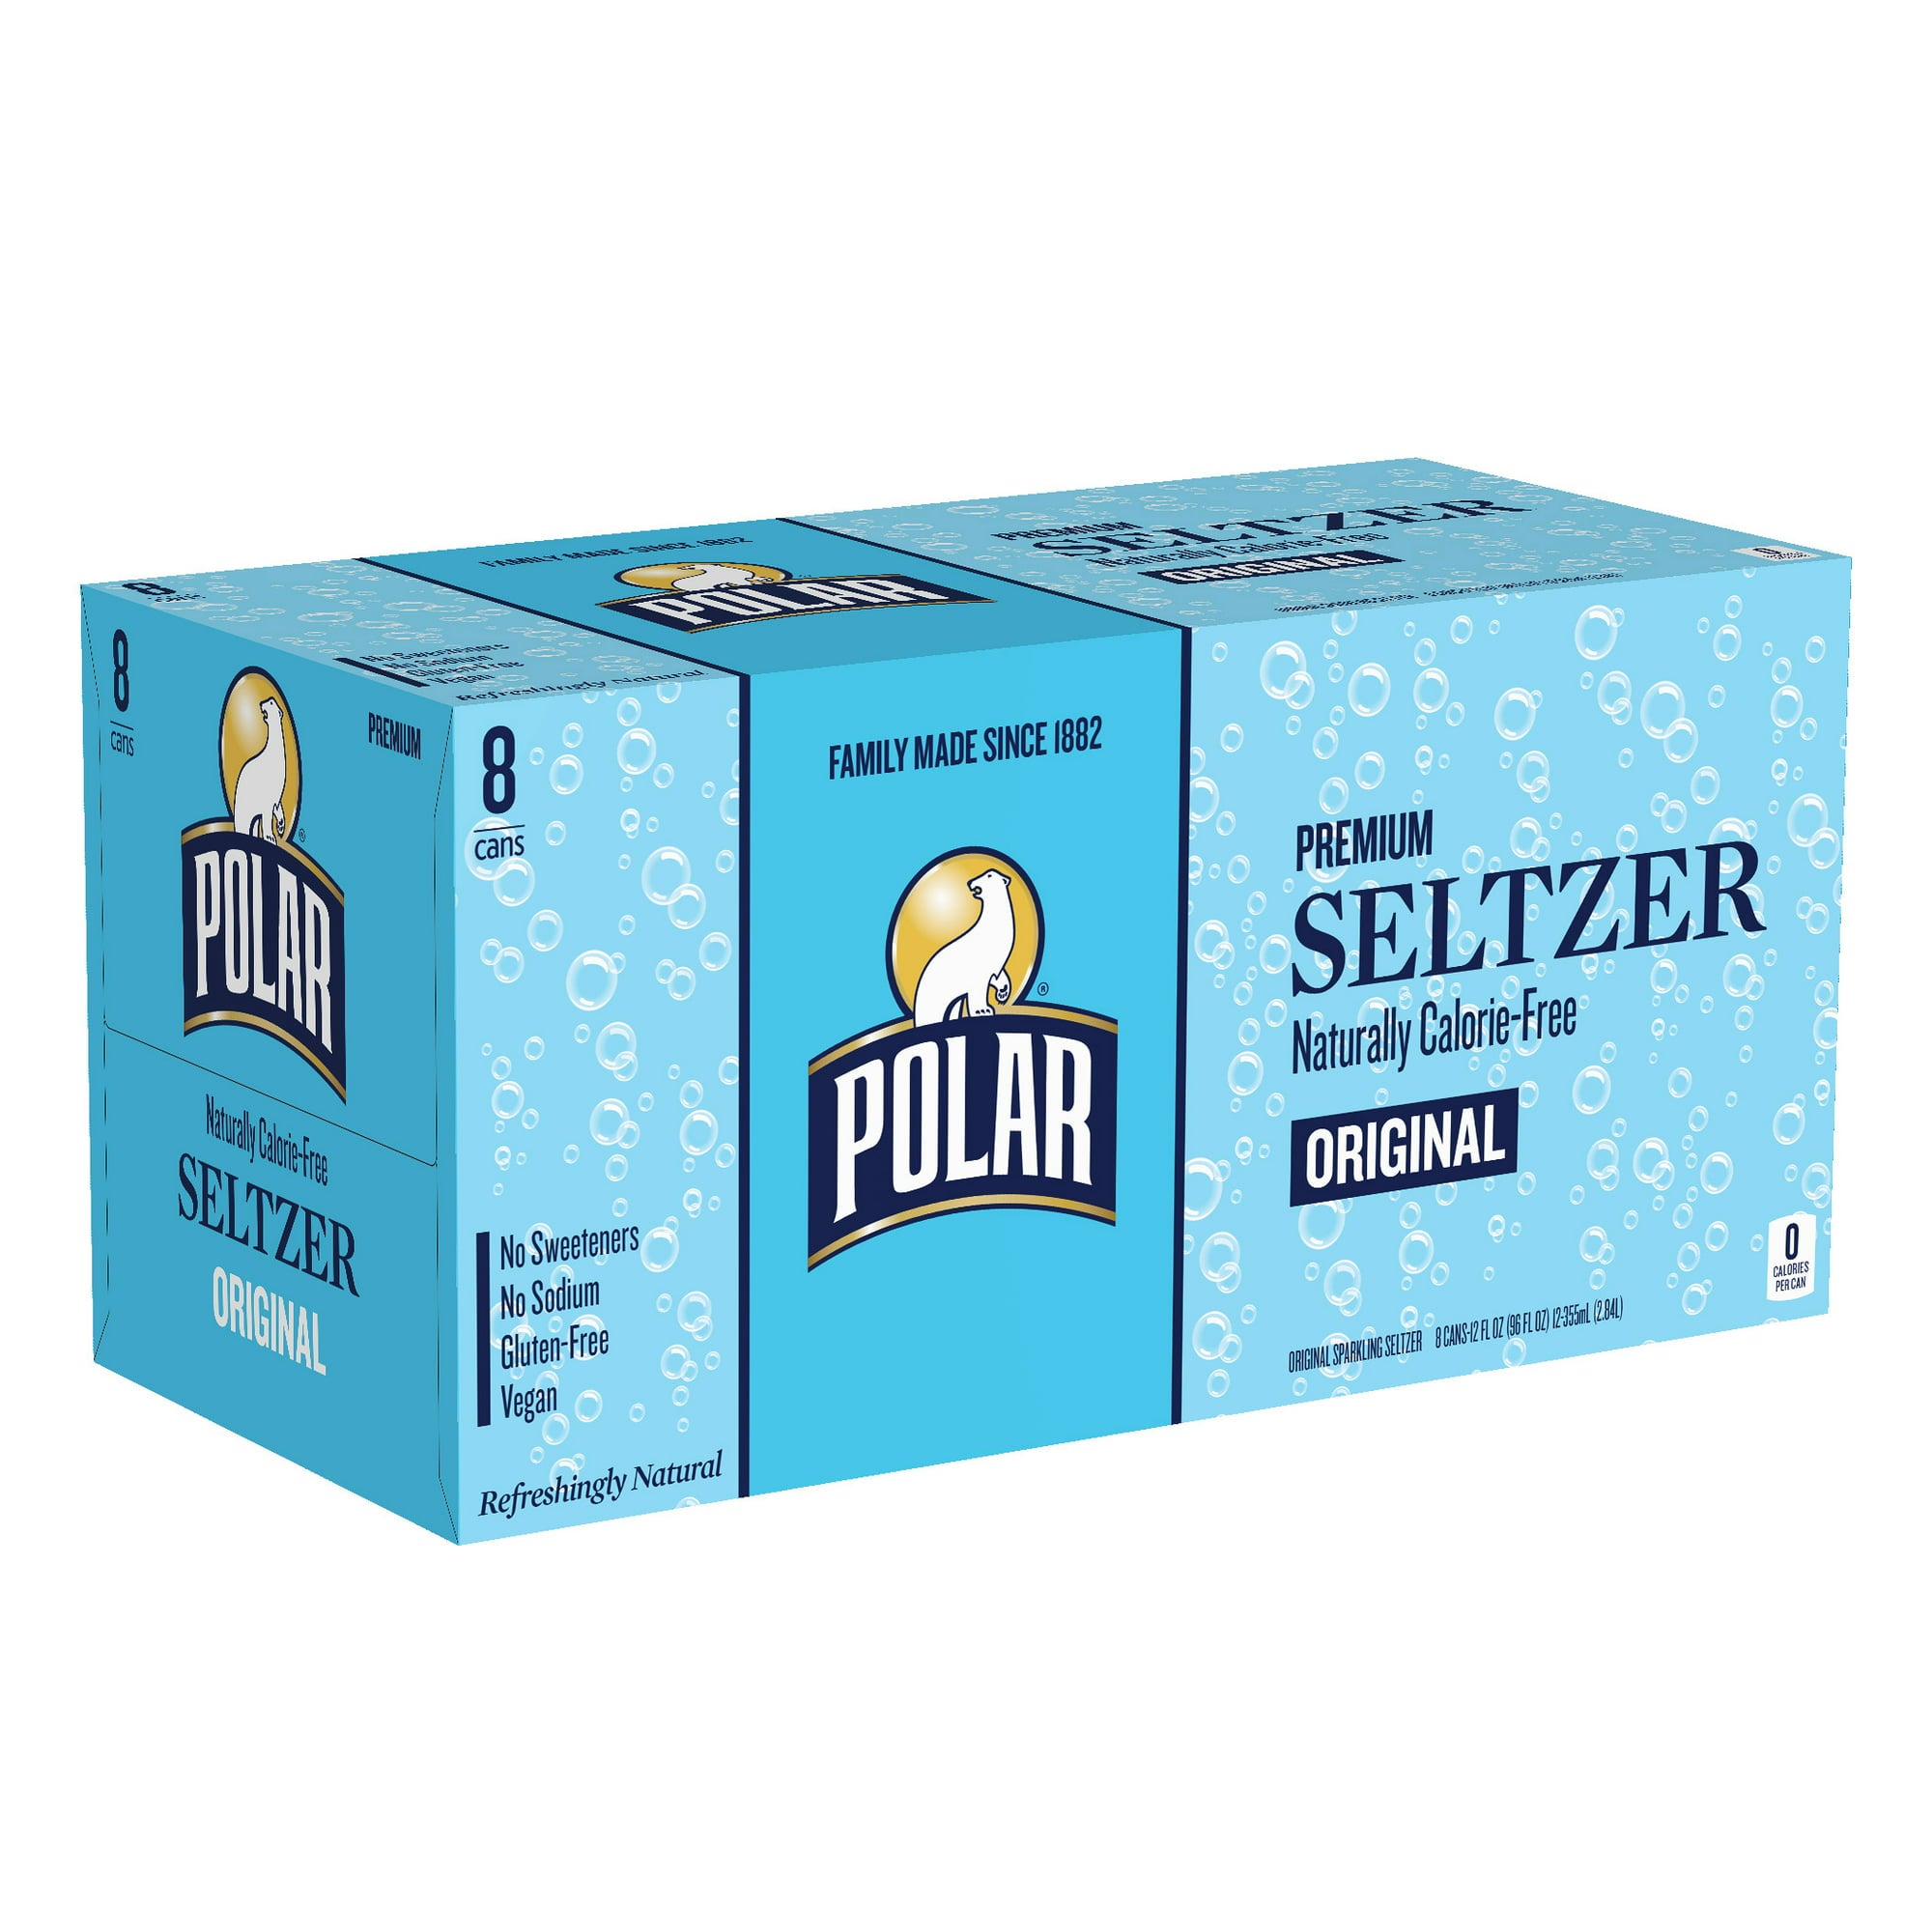 Polar Zero Calorie Original Sparkling Seltzer Water, 12 fl oz, 8 Pack Cans